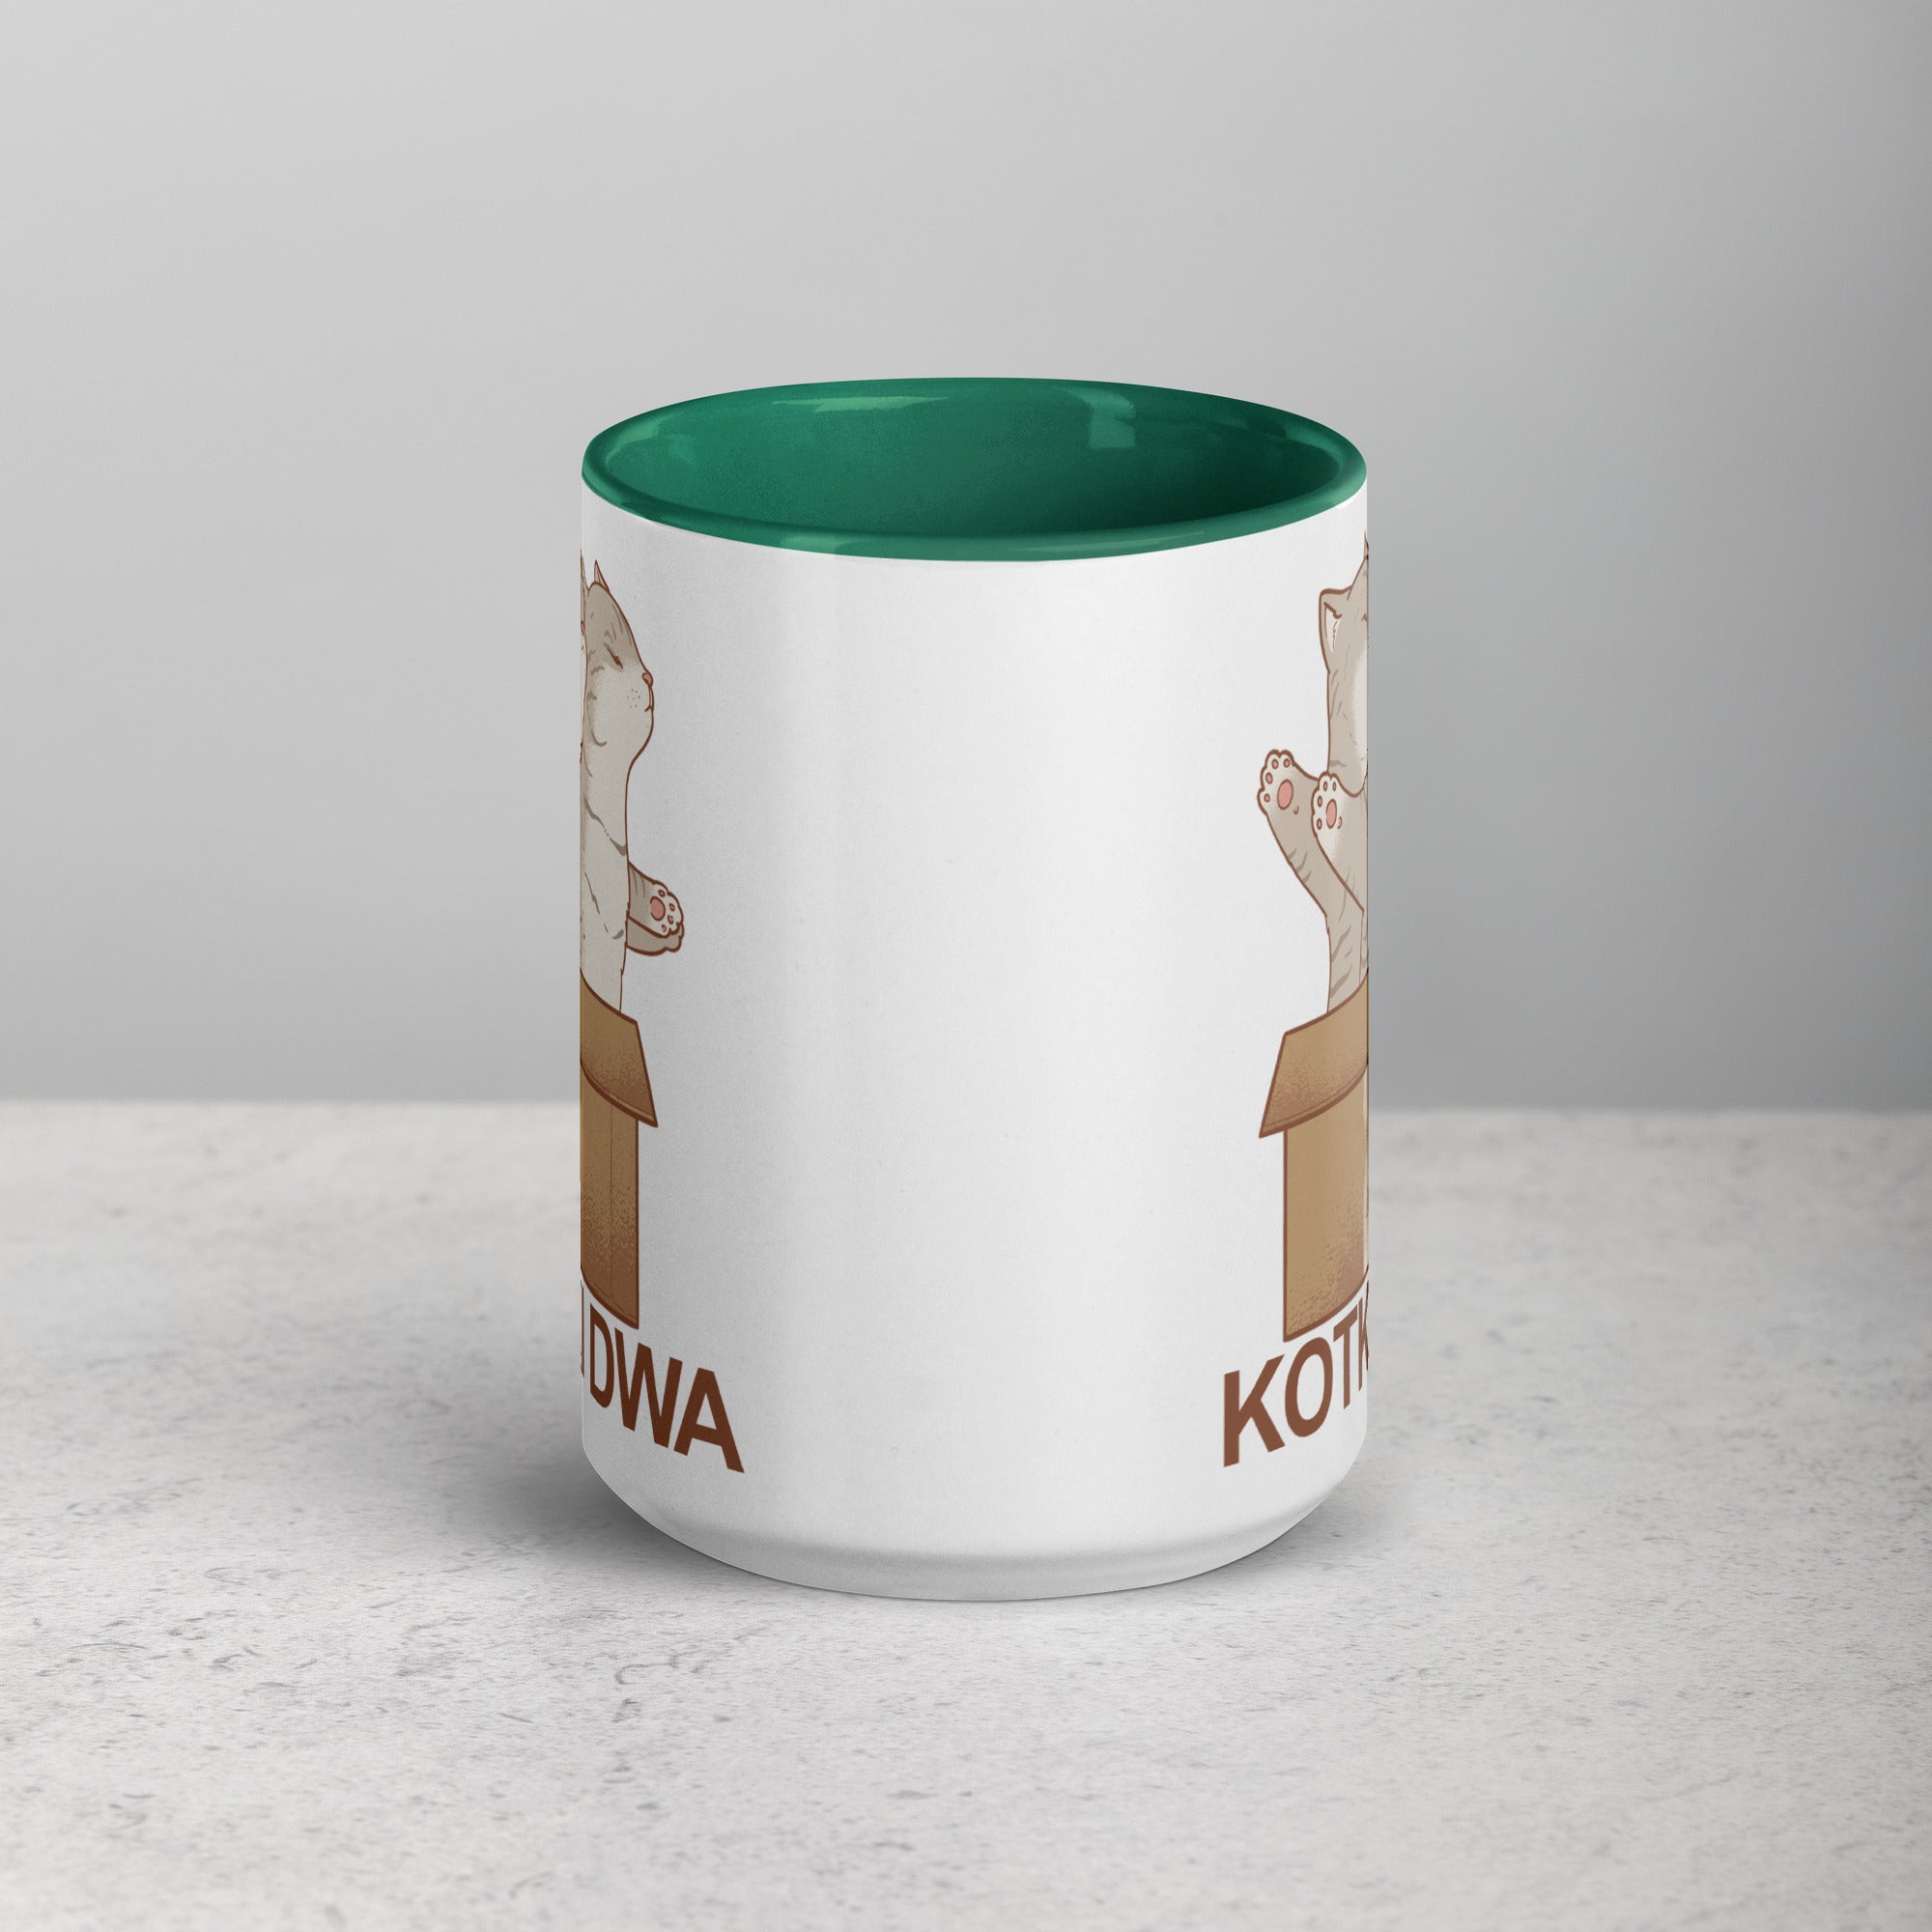 Kotki Dwa 15 Oz Coffee Mug with Color Inside  Polish Shirt Store   